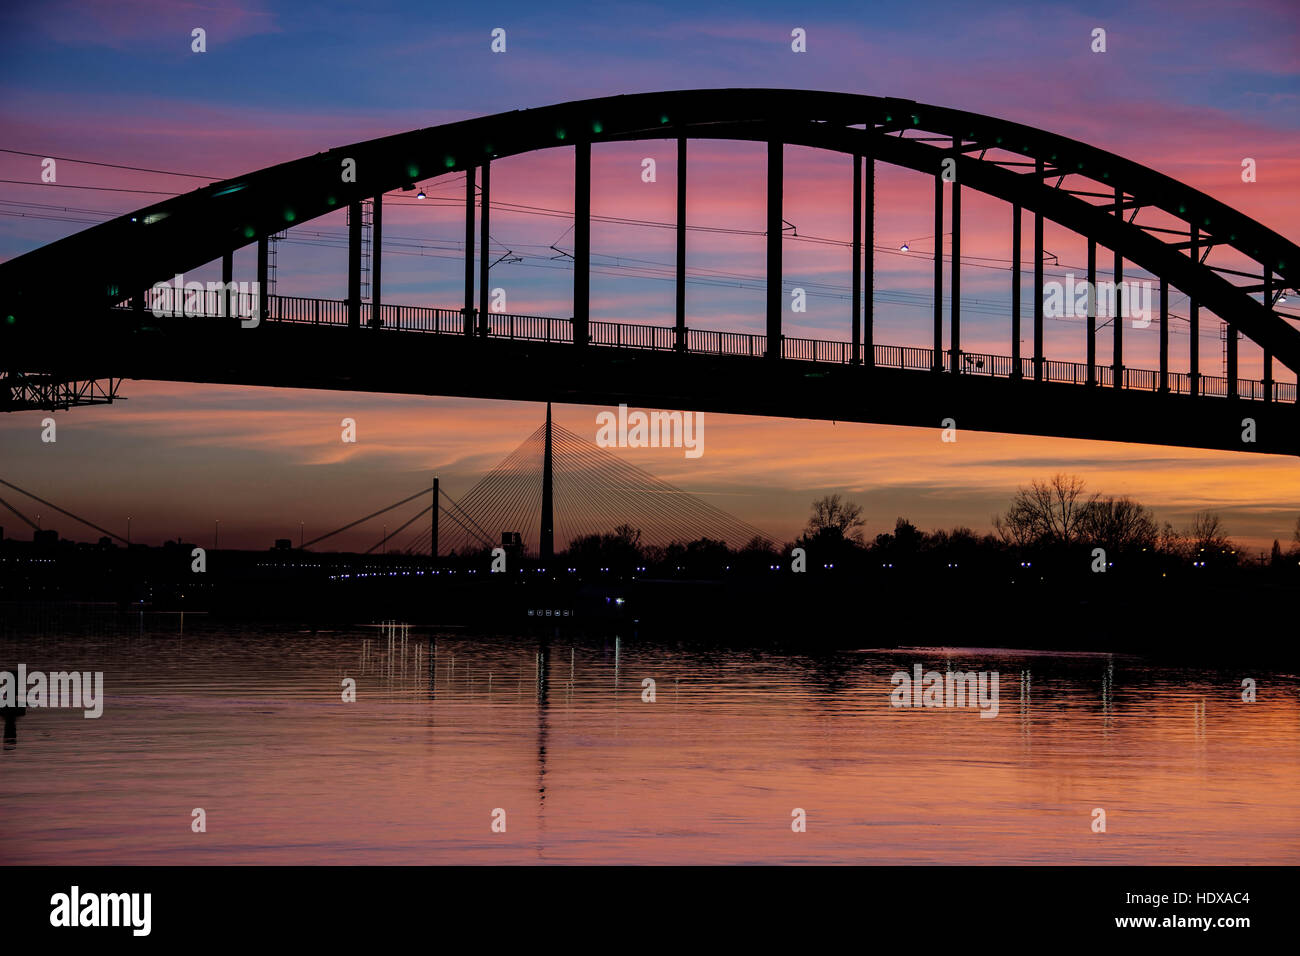 Belgrad, Serbien - Brücken über dem Fluss Sava bei Sonnenuntergang Stockfoto